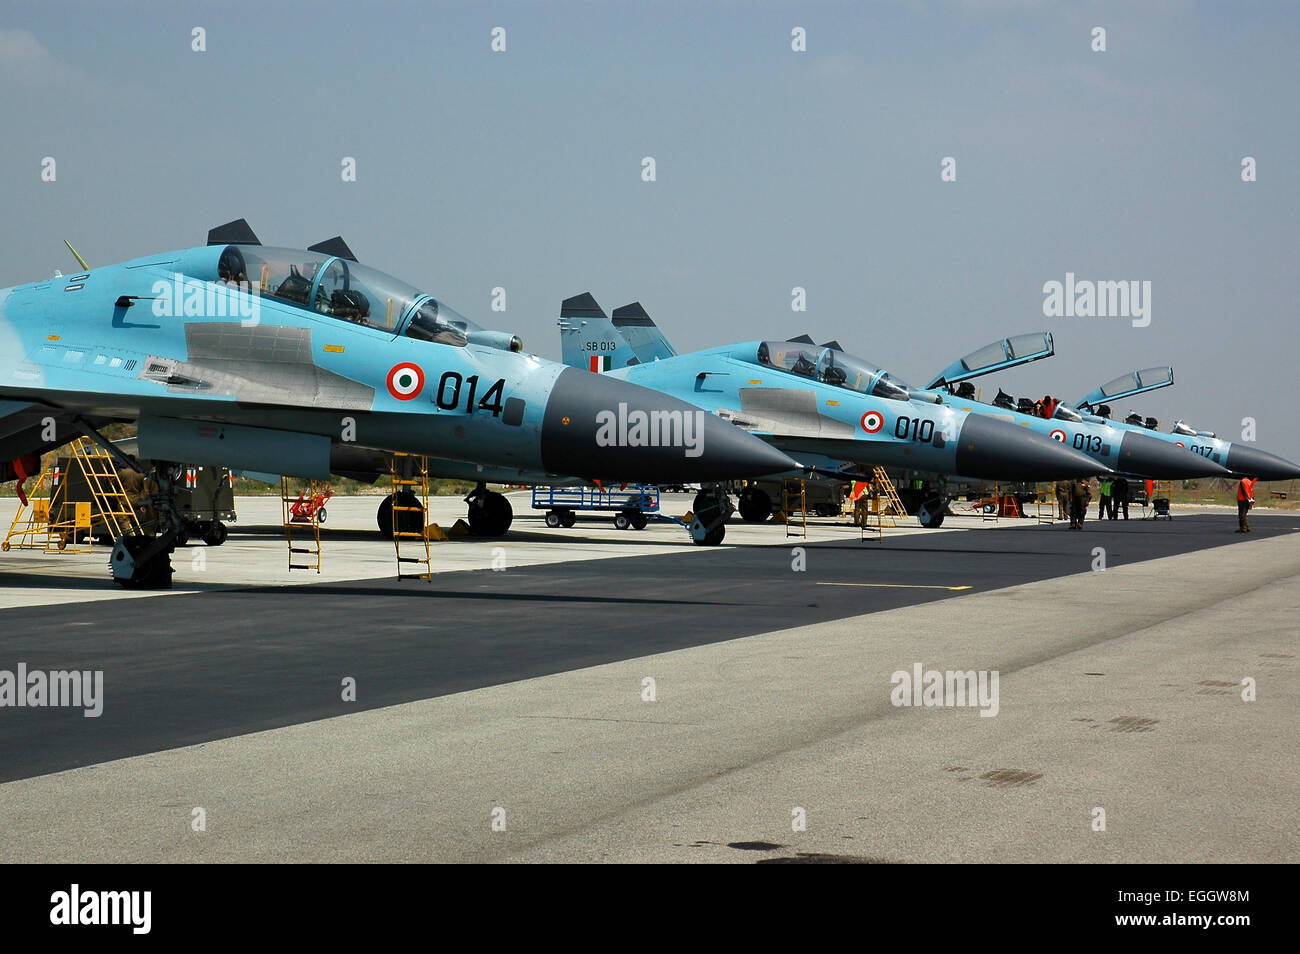 Sukhoi Su-30 aircraft from the Indian Air Force at Istres Air Base, France, during exercise Garuda II. Stock Photo